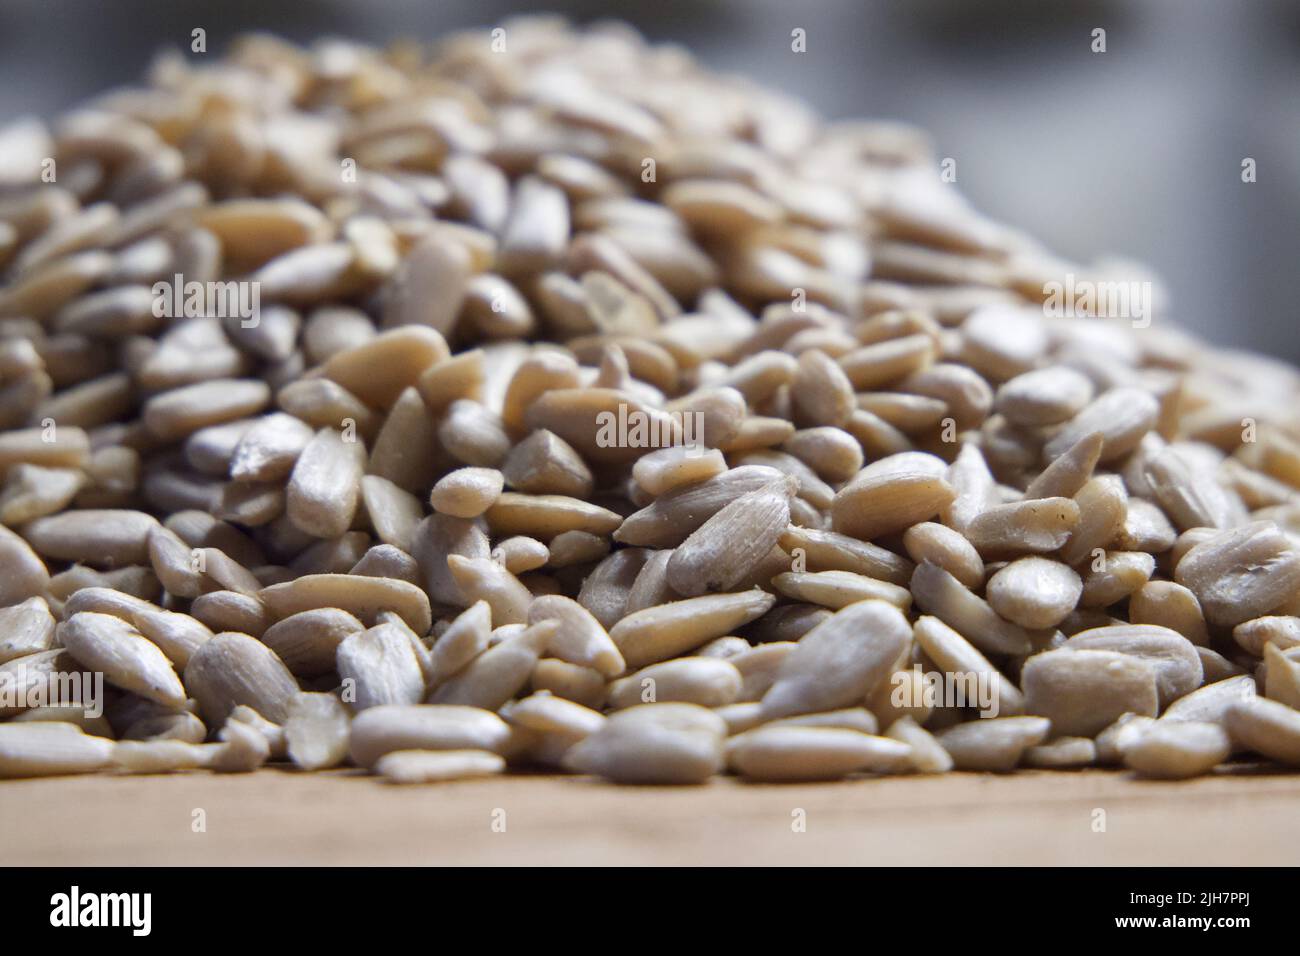 Un montón de semillas de girasol peladas sobre una superficie de madera, primer plano. Semillas de girasol sin cáscara. Foto de stock